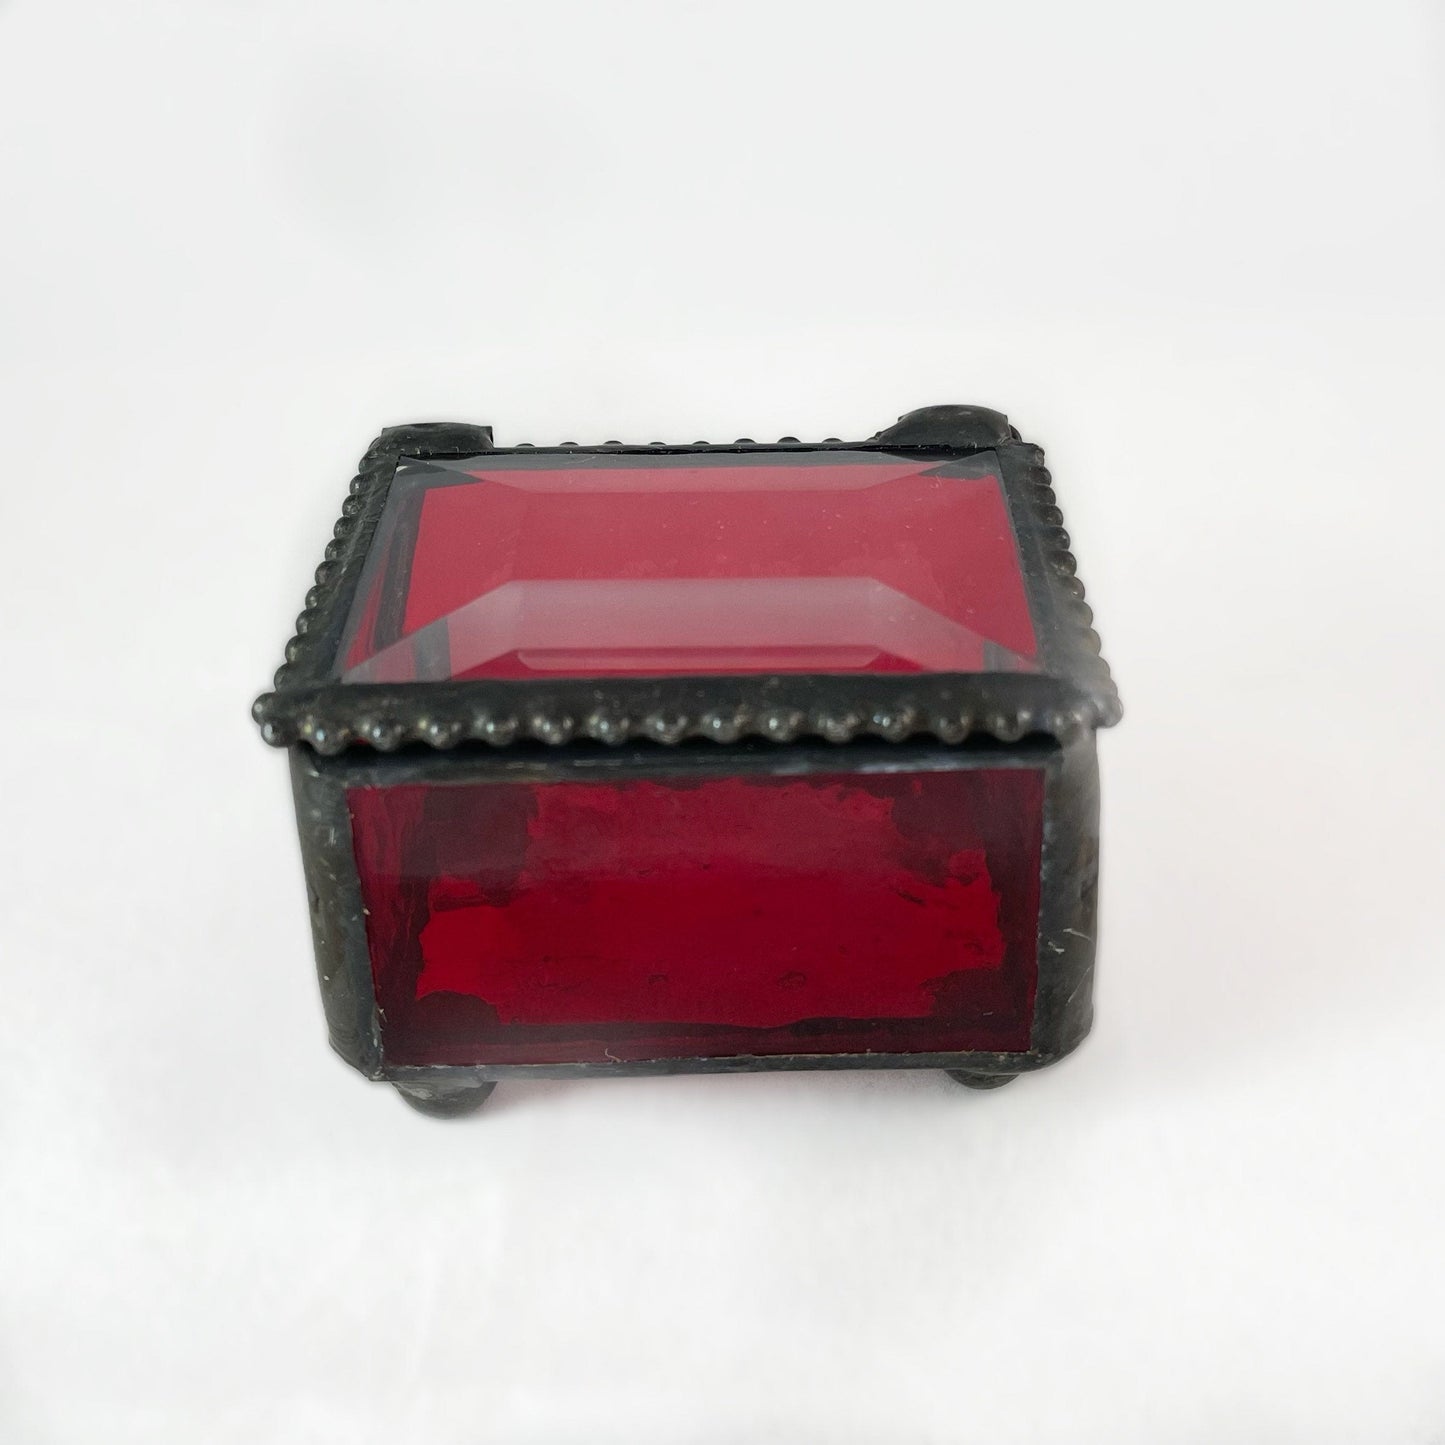 Small Red Stained Glass Decorative Keepsake Jewelry Box